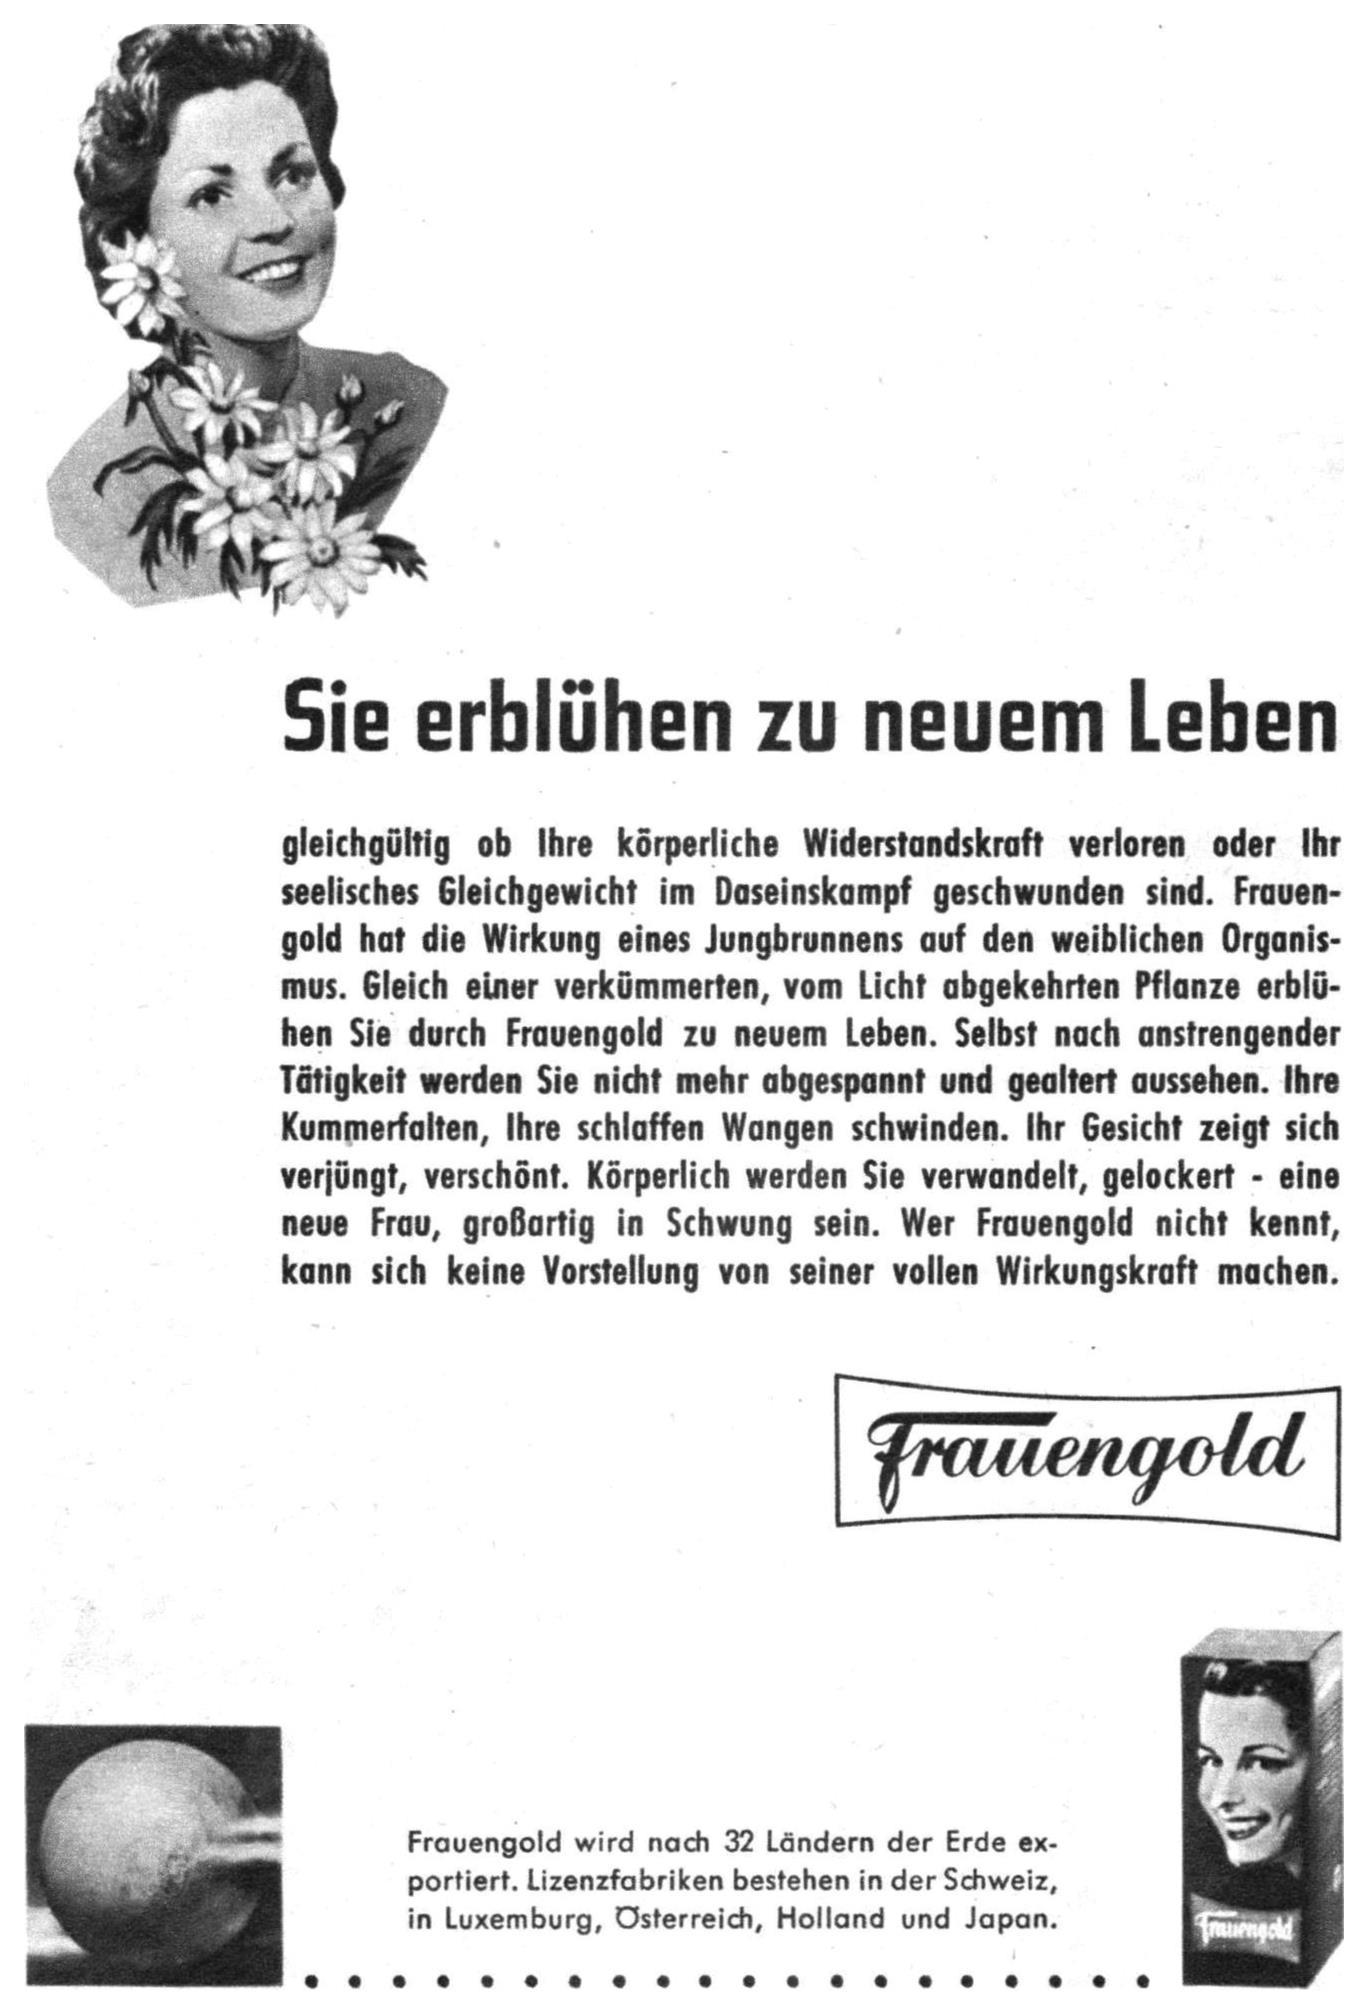 Frauengold 1958 099.jpg